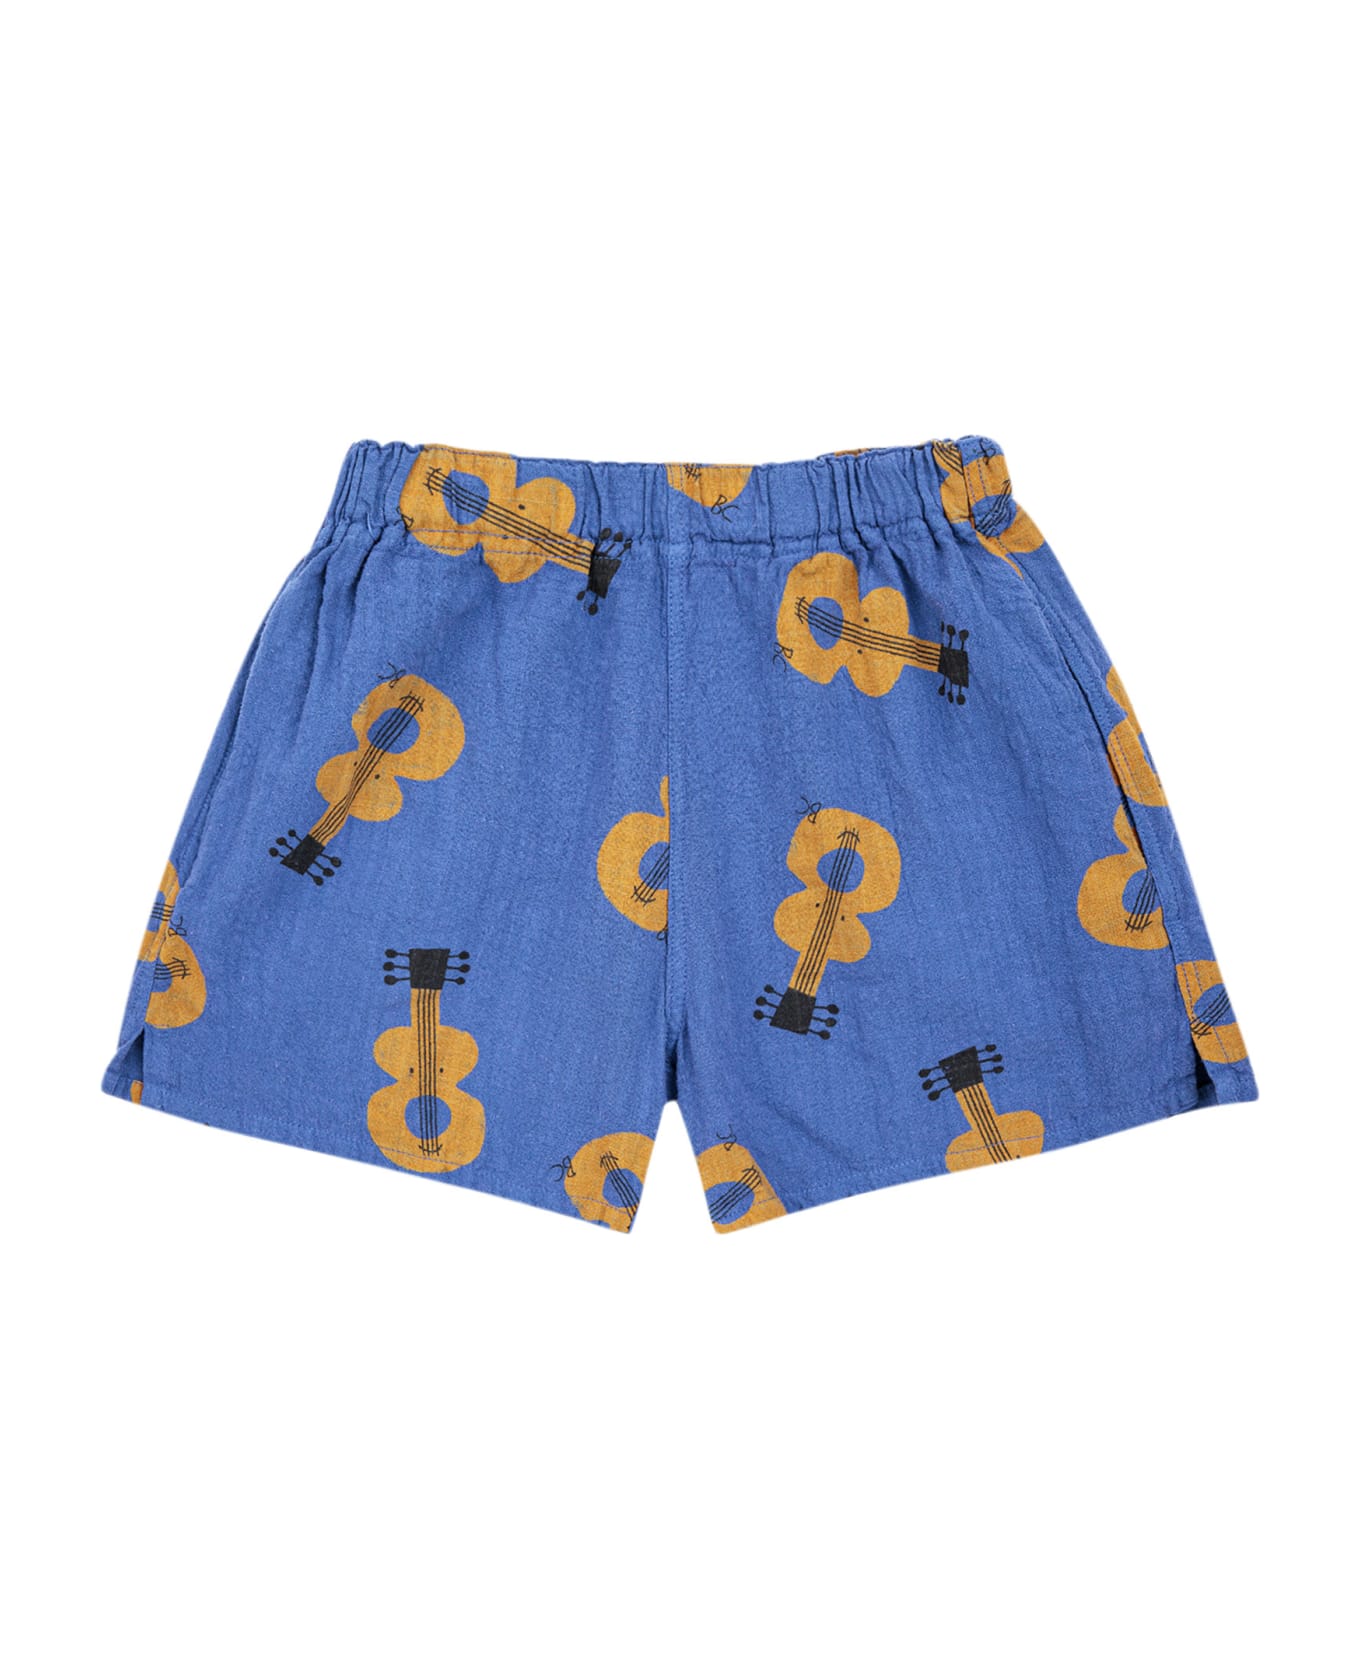 Bobo Choses Blue Shorts For Kids - Blue